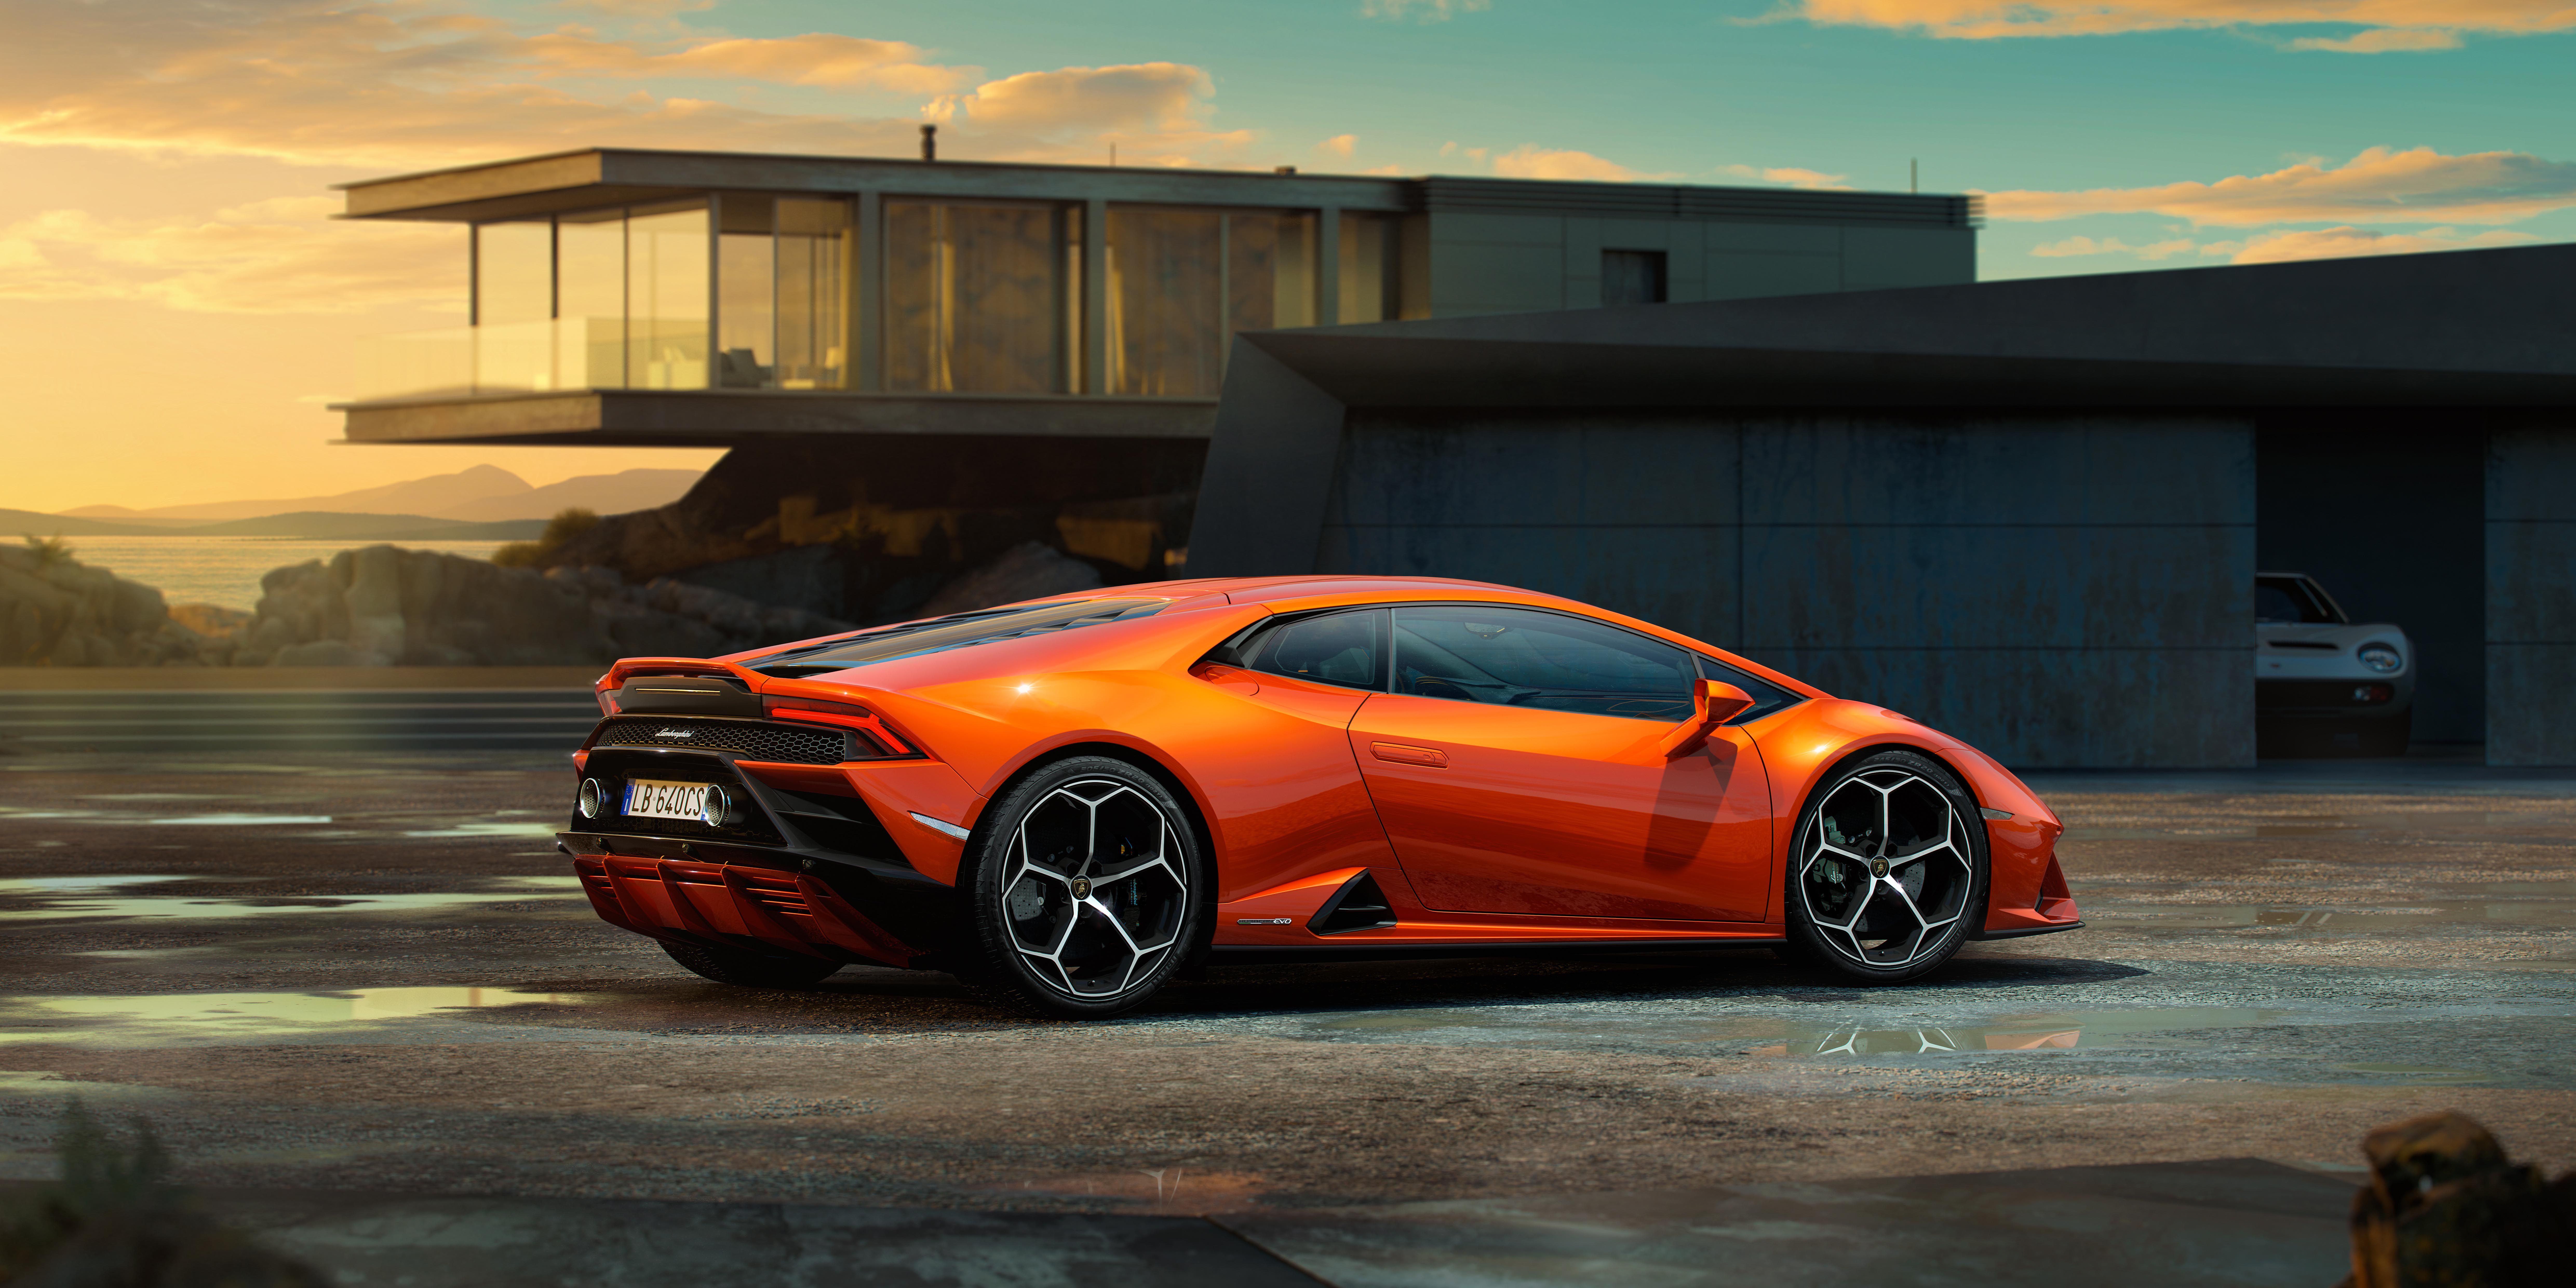 Lamborghini Huracan 8k Ultra HD Wallpaper | Background Image ...